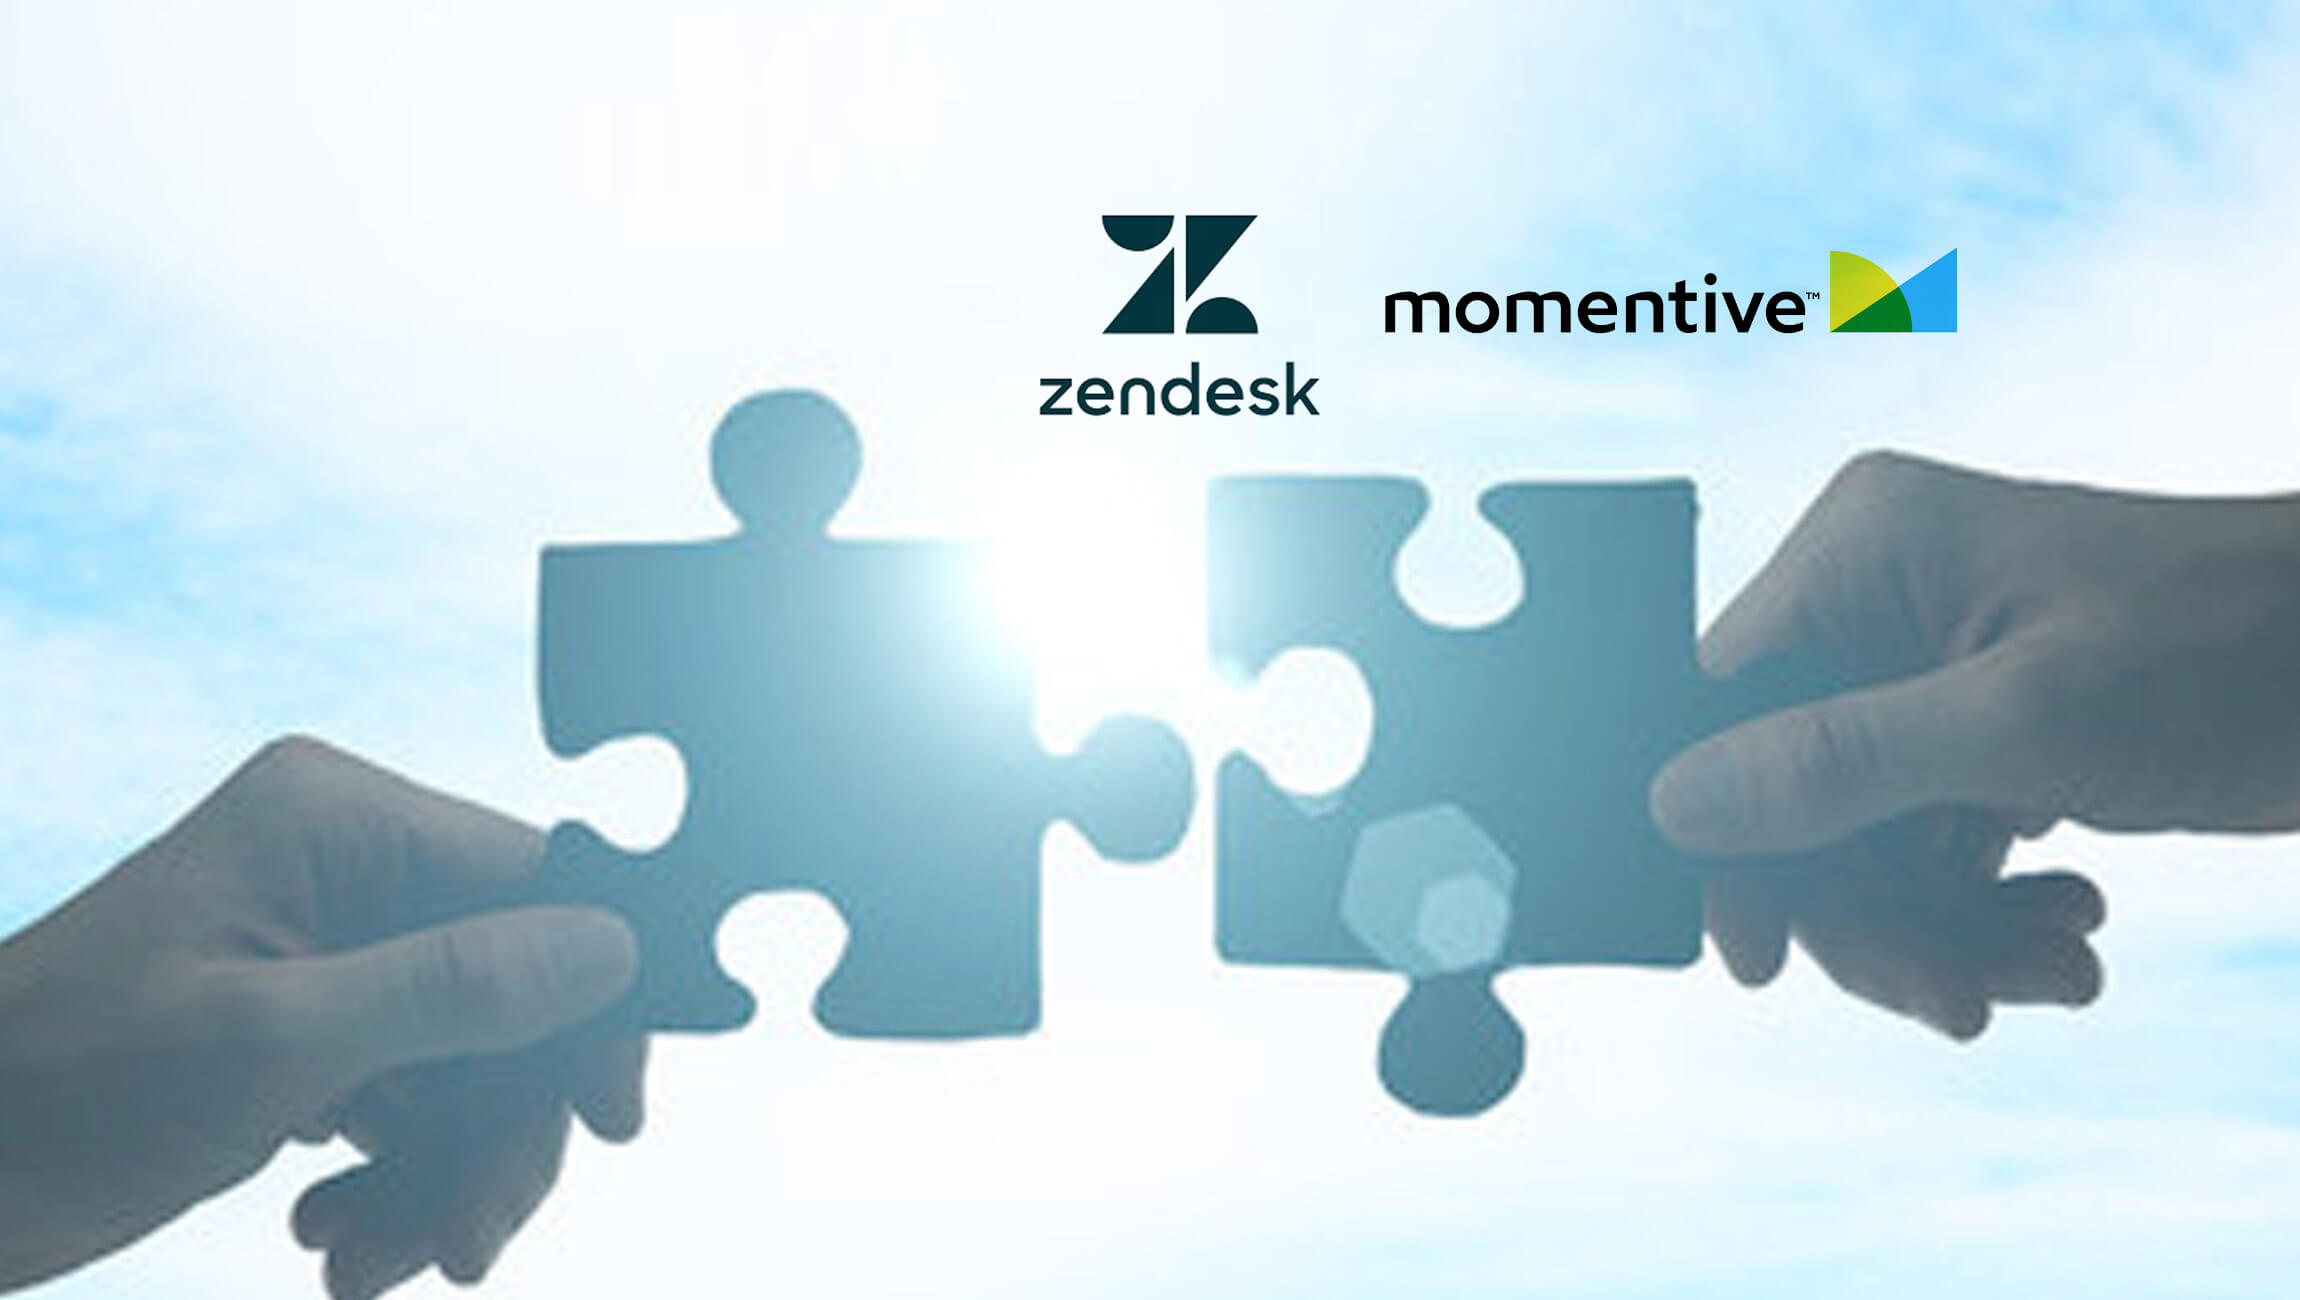 Zendesk acquired Momentive